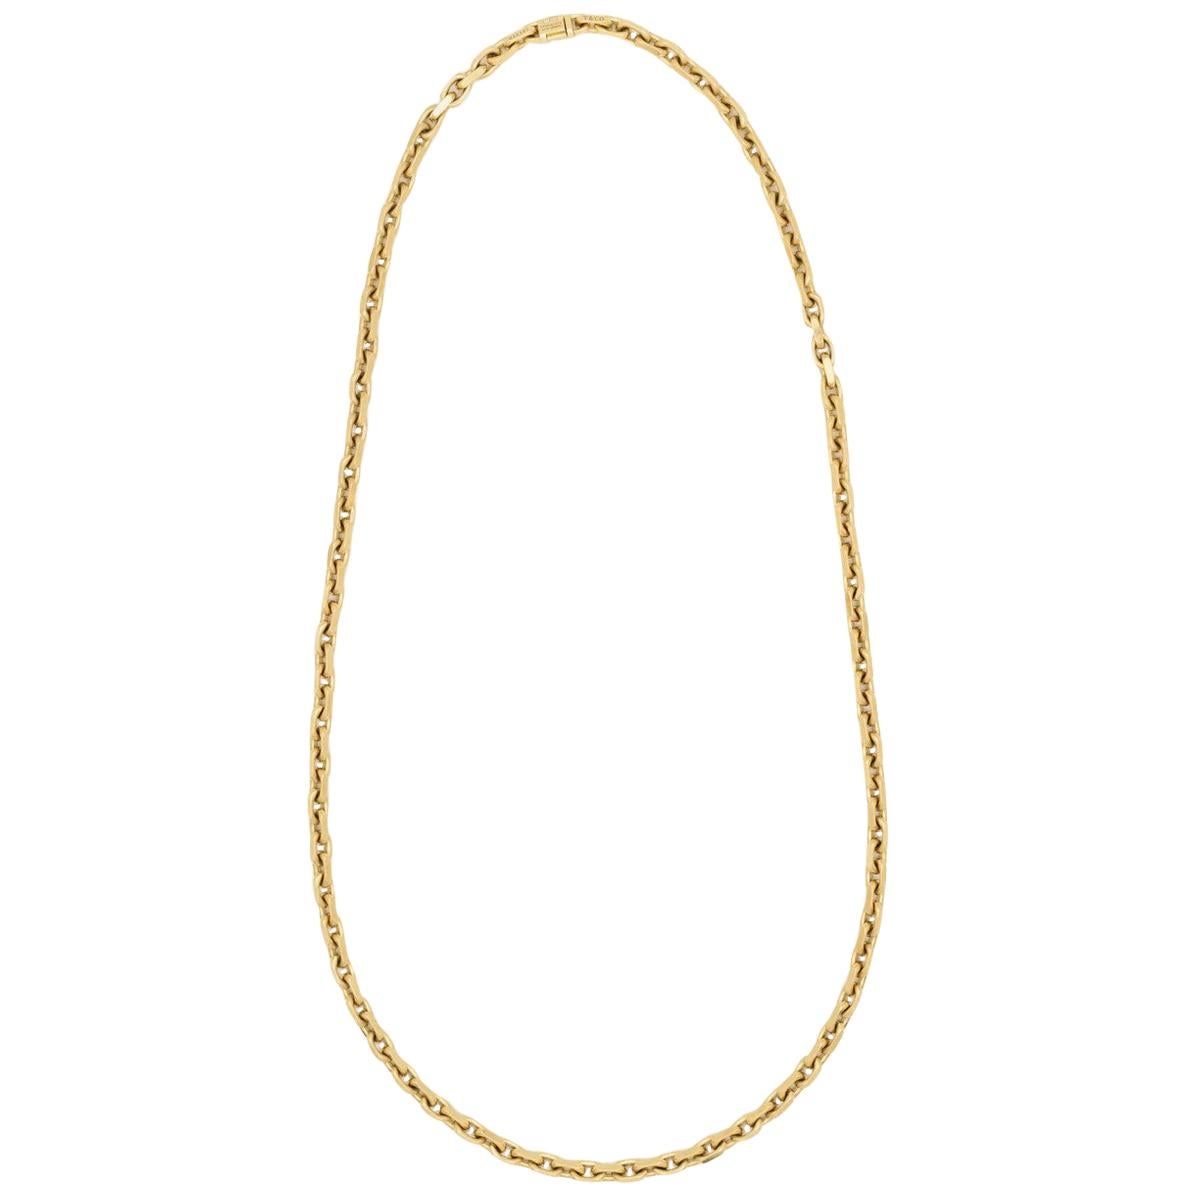 Vintage Signed Tiffany & Co. 18 Karat Chain Necklace